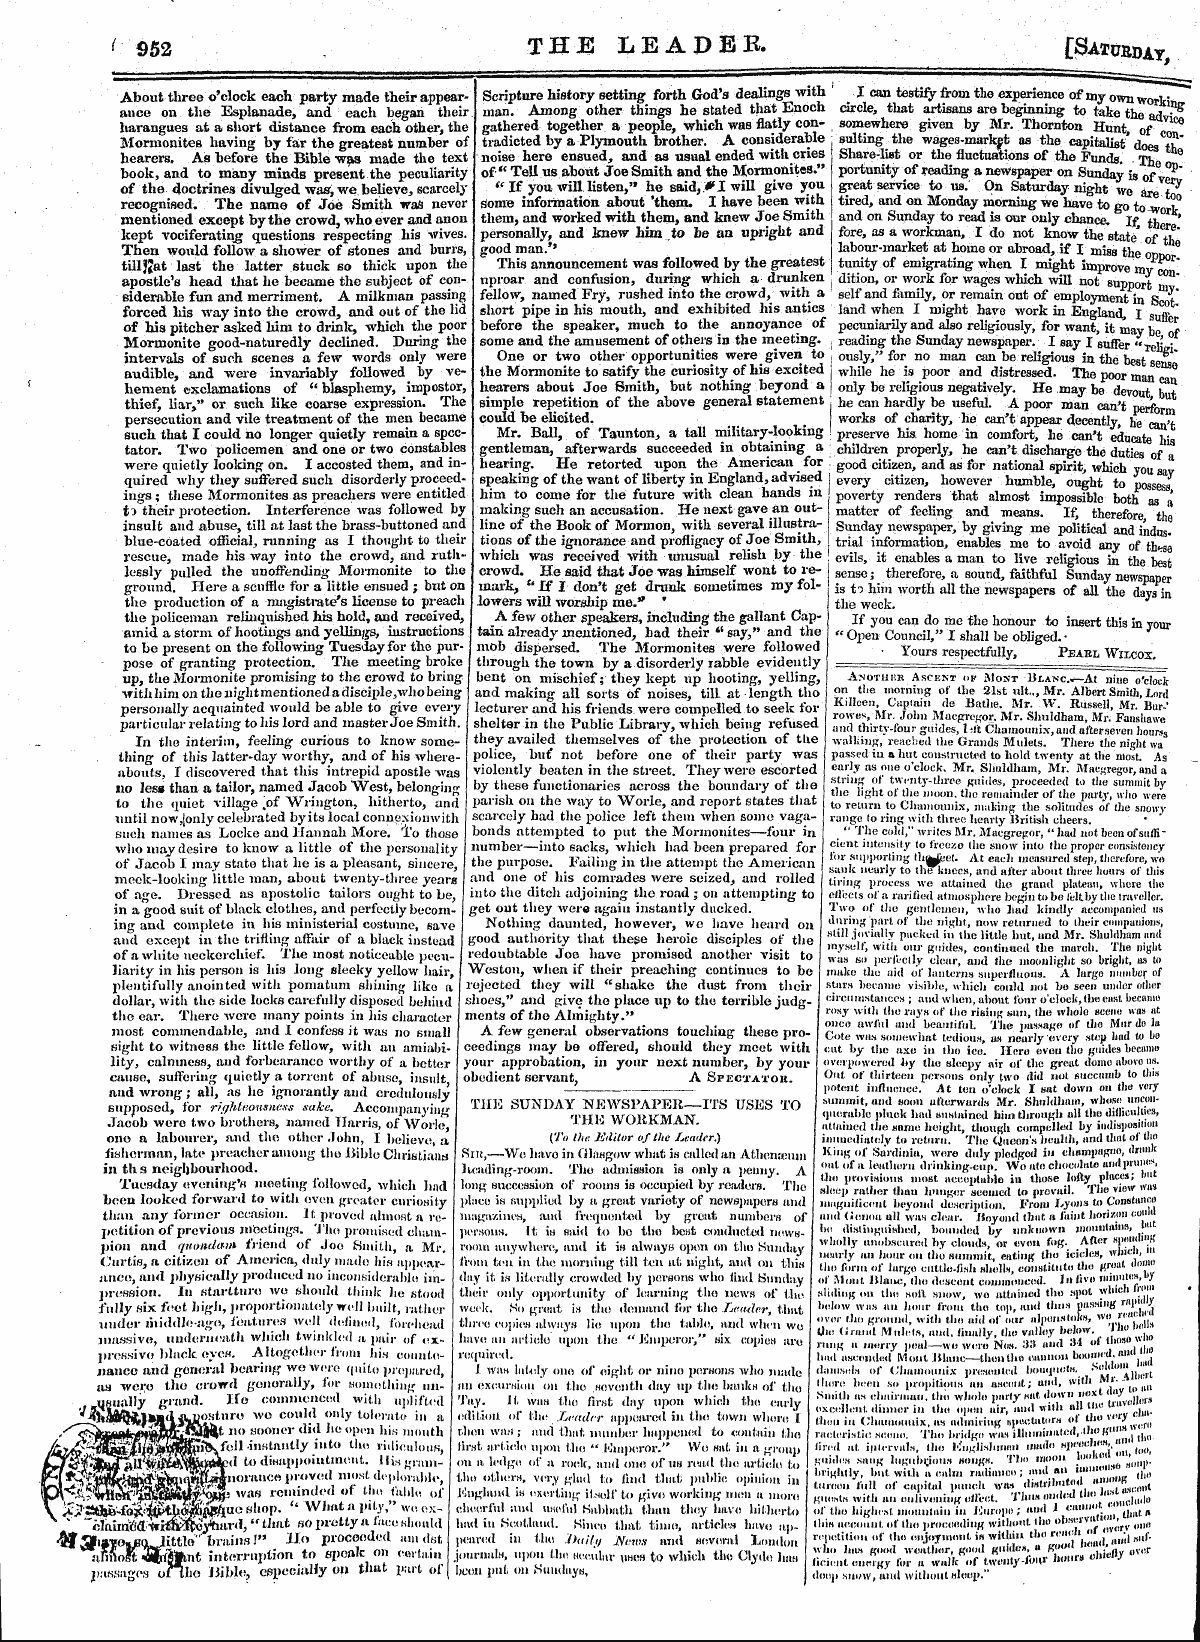 Leader (1850-1860): jS F Y, 2nd edition - ( 952 The Leader, W^Mkf,